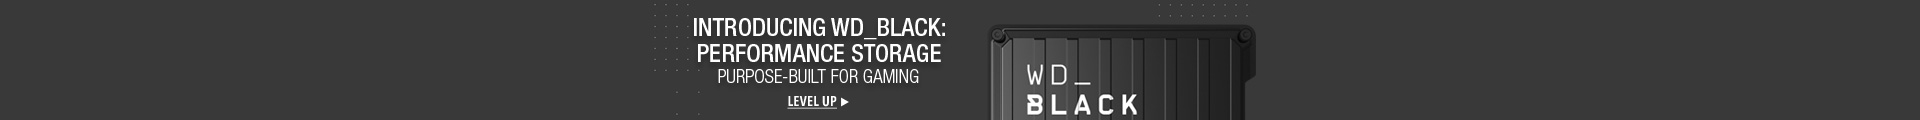 WD Black Performance Storage